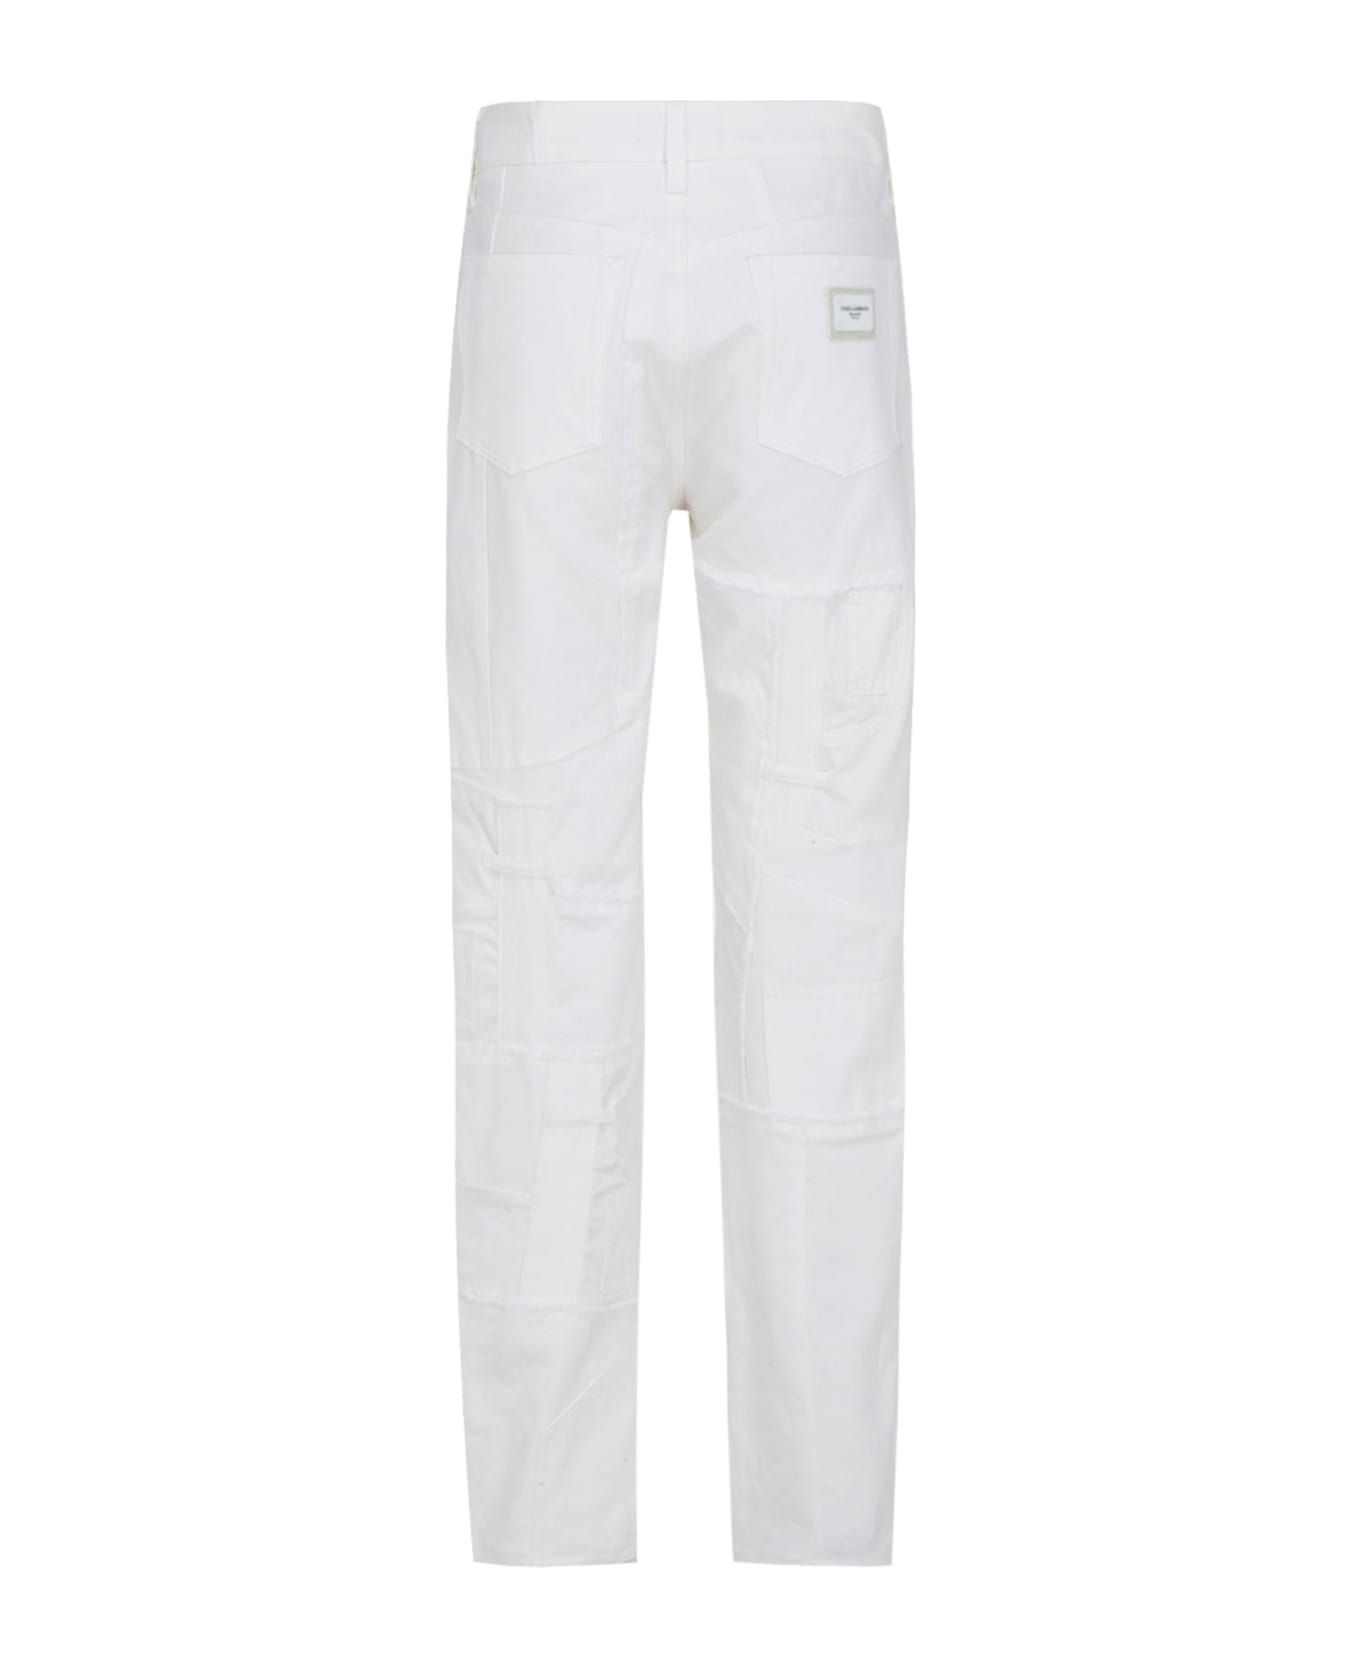 Dolce & Gabbana Denim Jeans - White